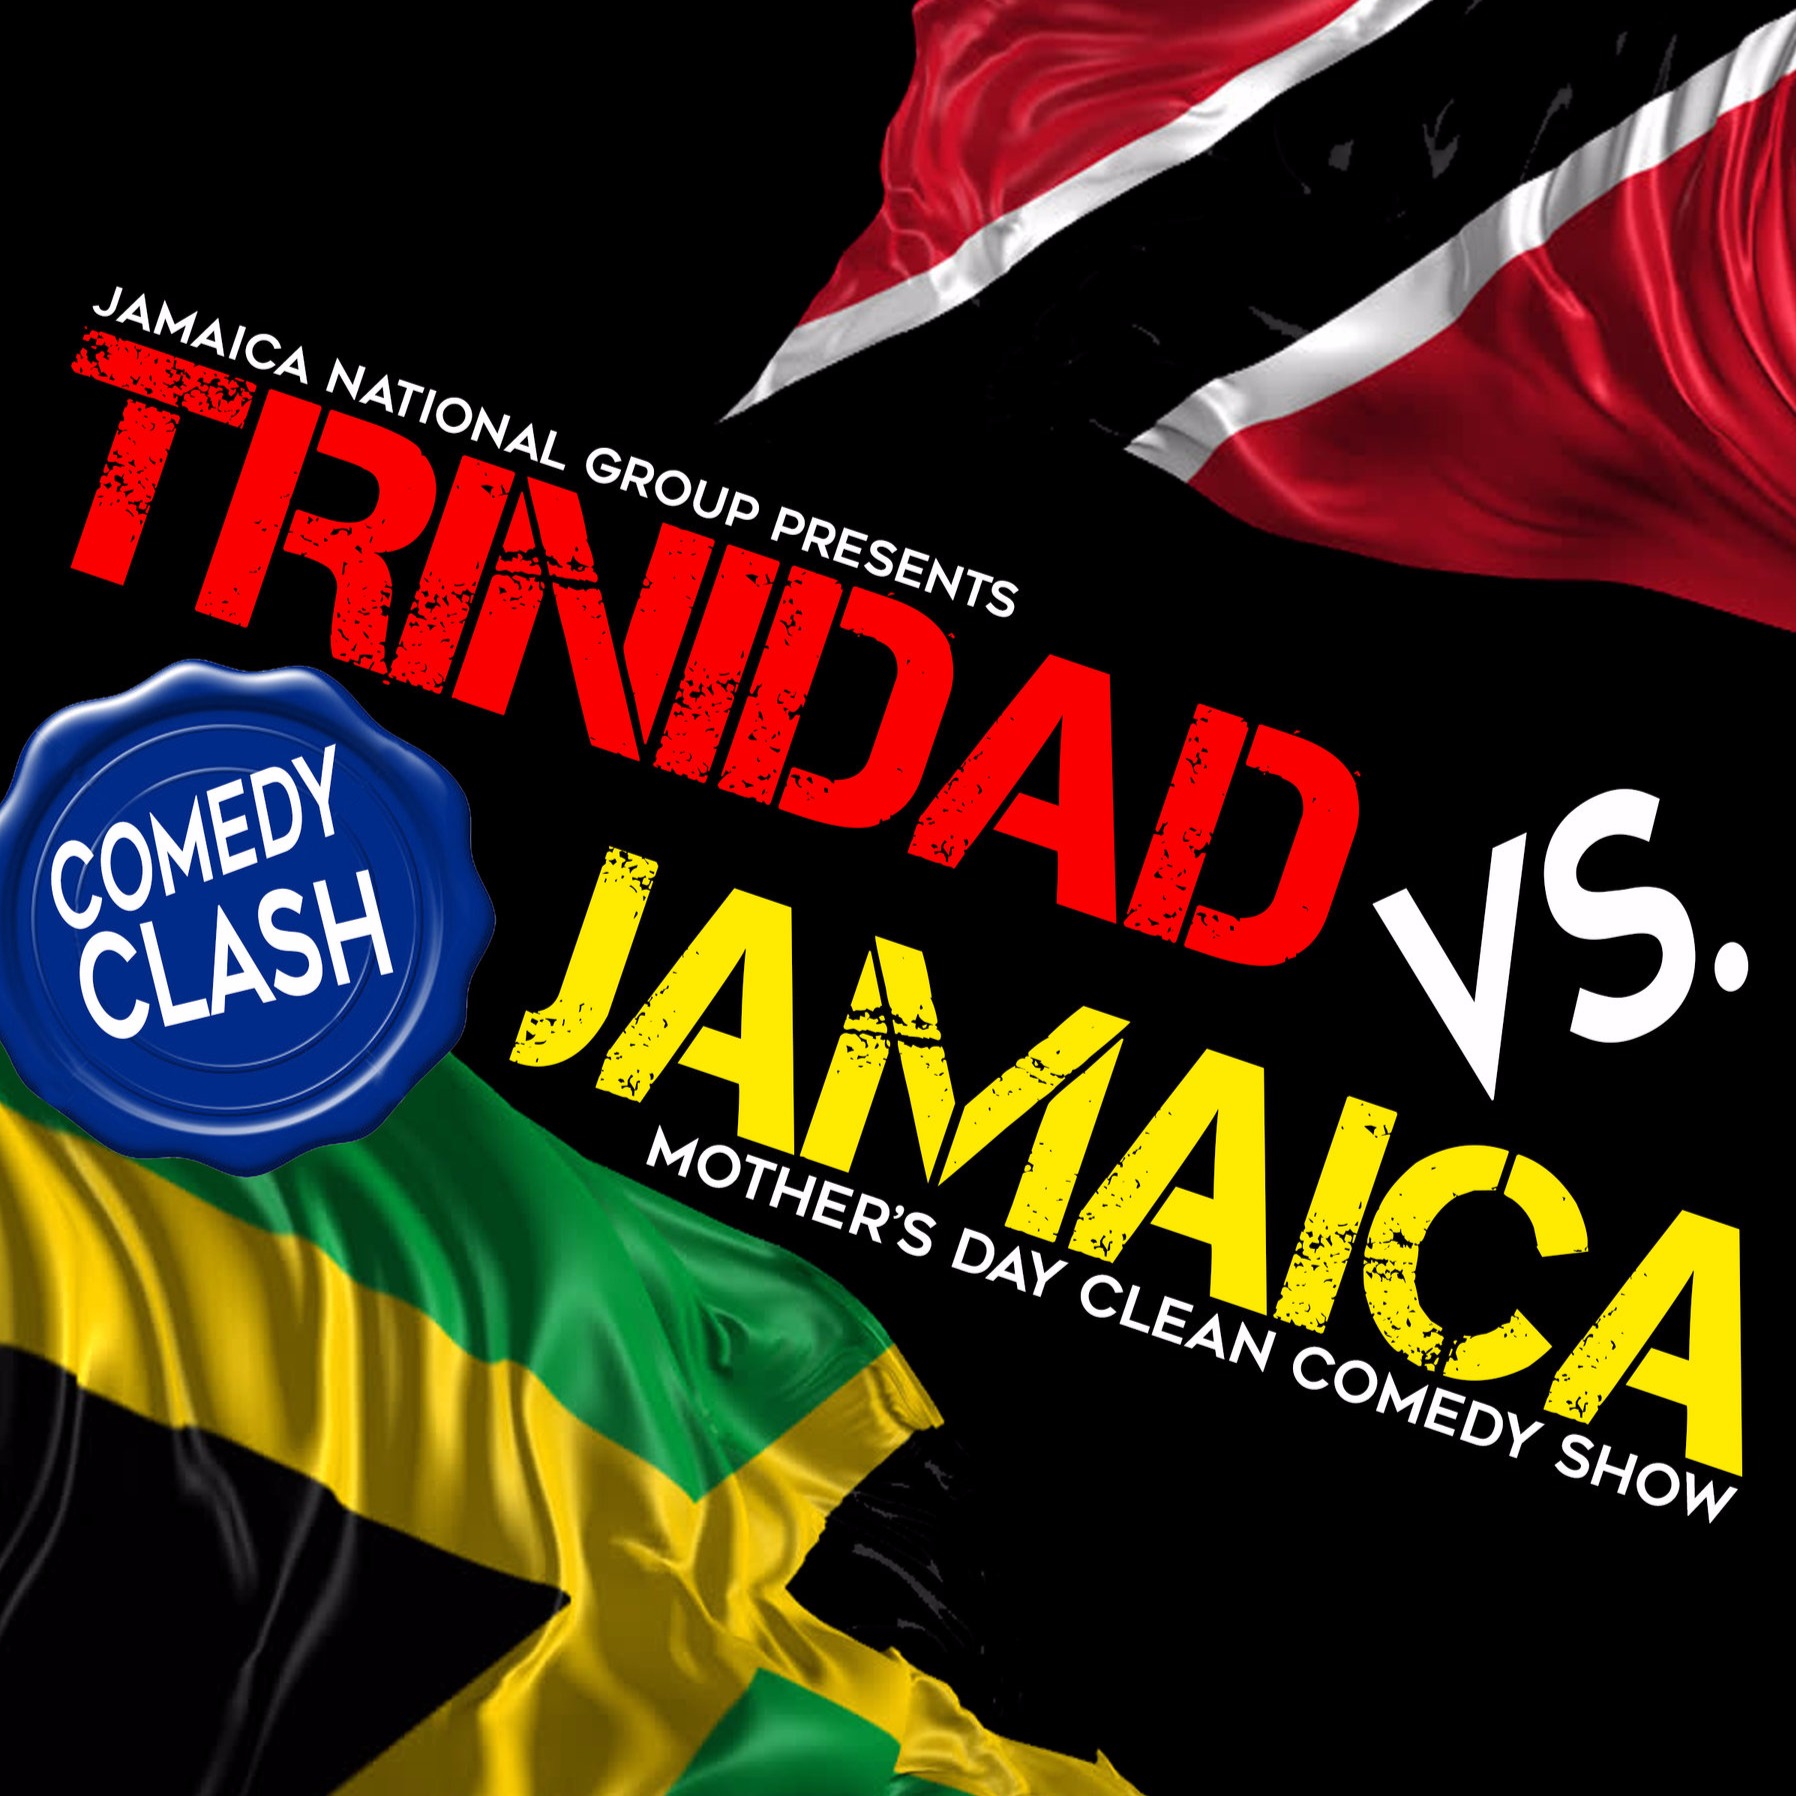 TRINIDAD VS JAMAICA MOTHER'S DAY COMEDY SHOW 2017 - 2PM